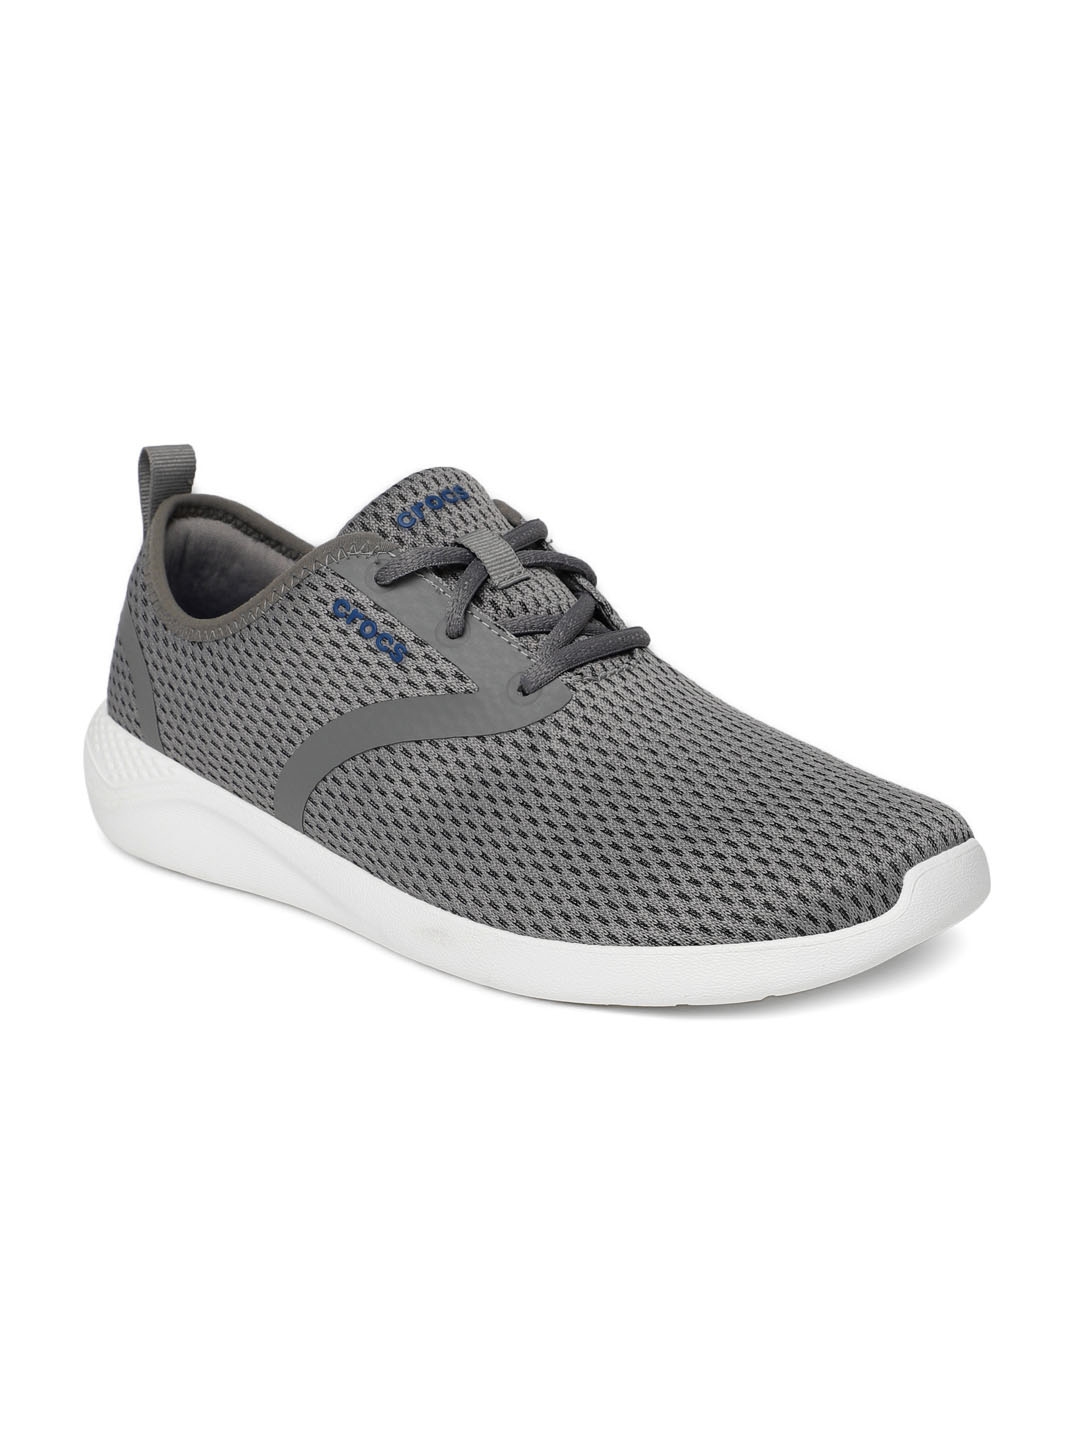 Buy Crocs Men Grey Sneakers - Casual Shoes for Men 8568803 | Myntra